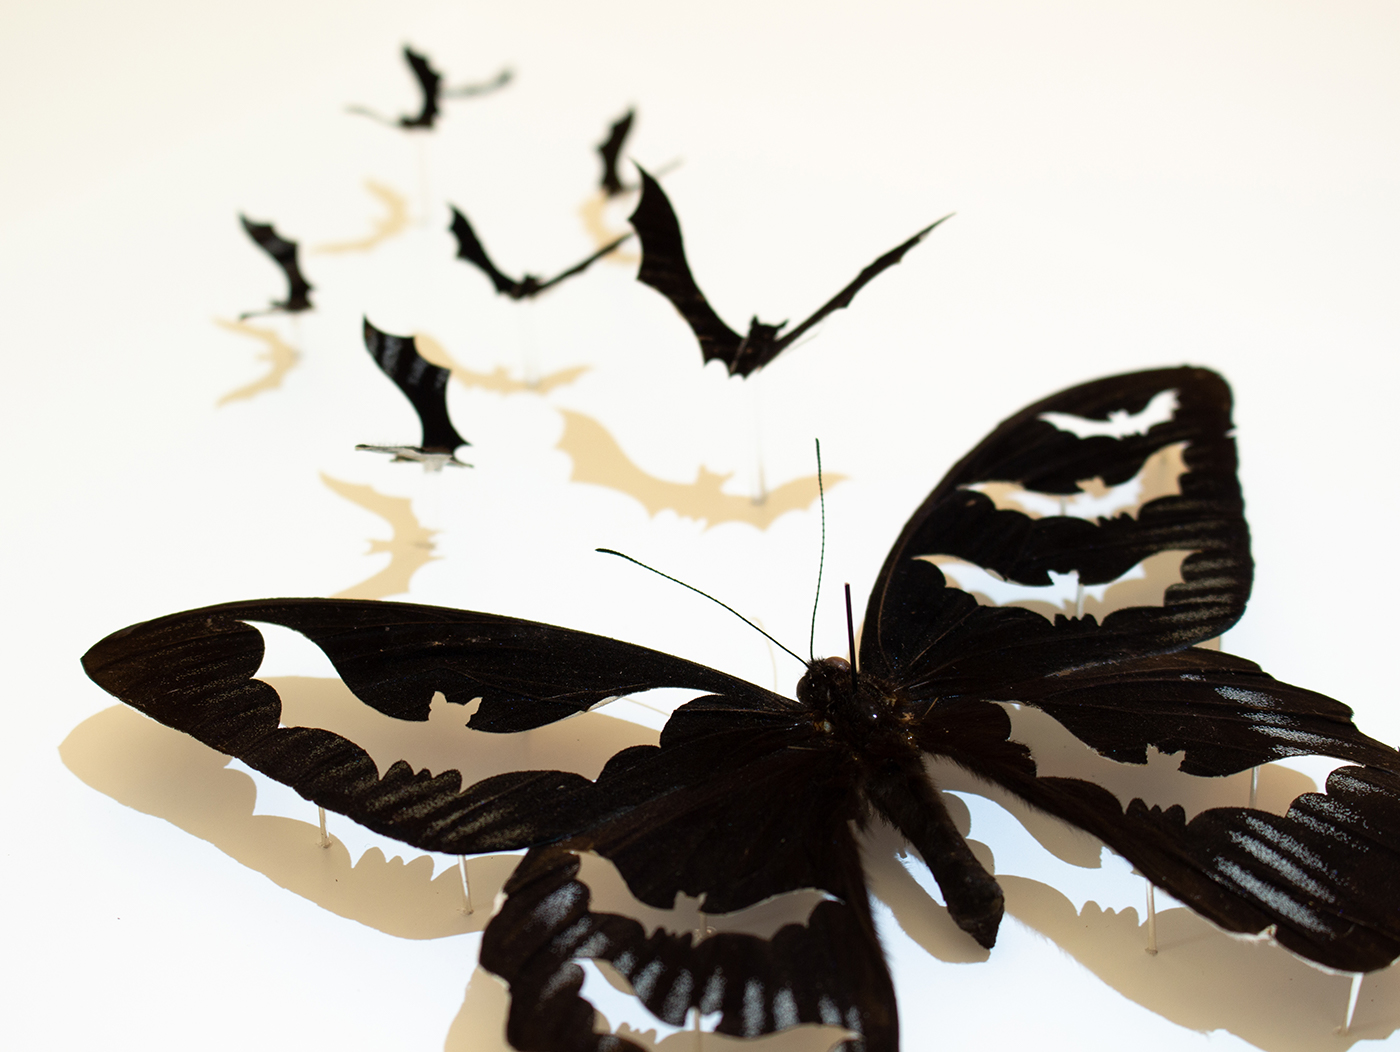 Metamorphosis taxidermy artwork, closeup image of butterfly cut into bats